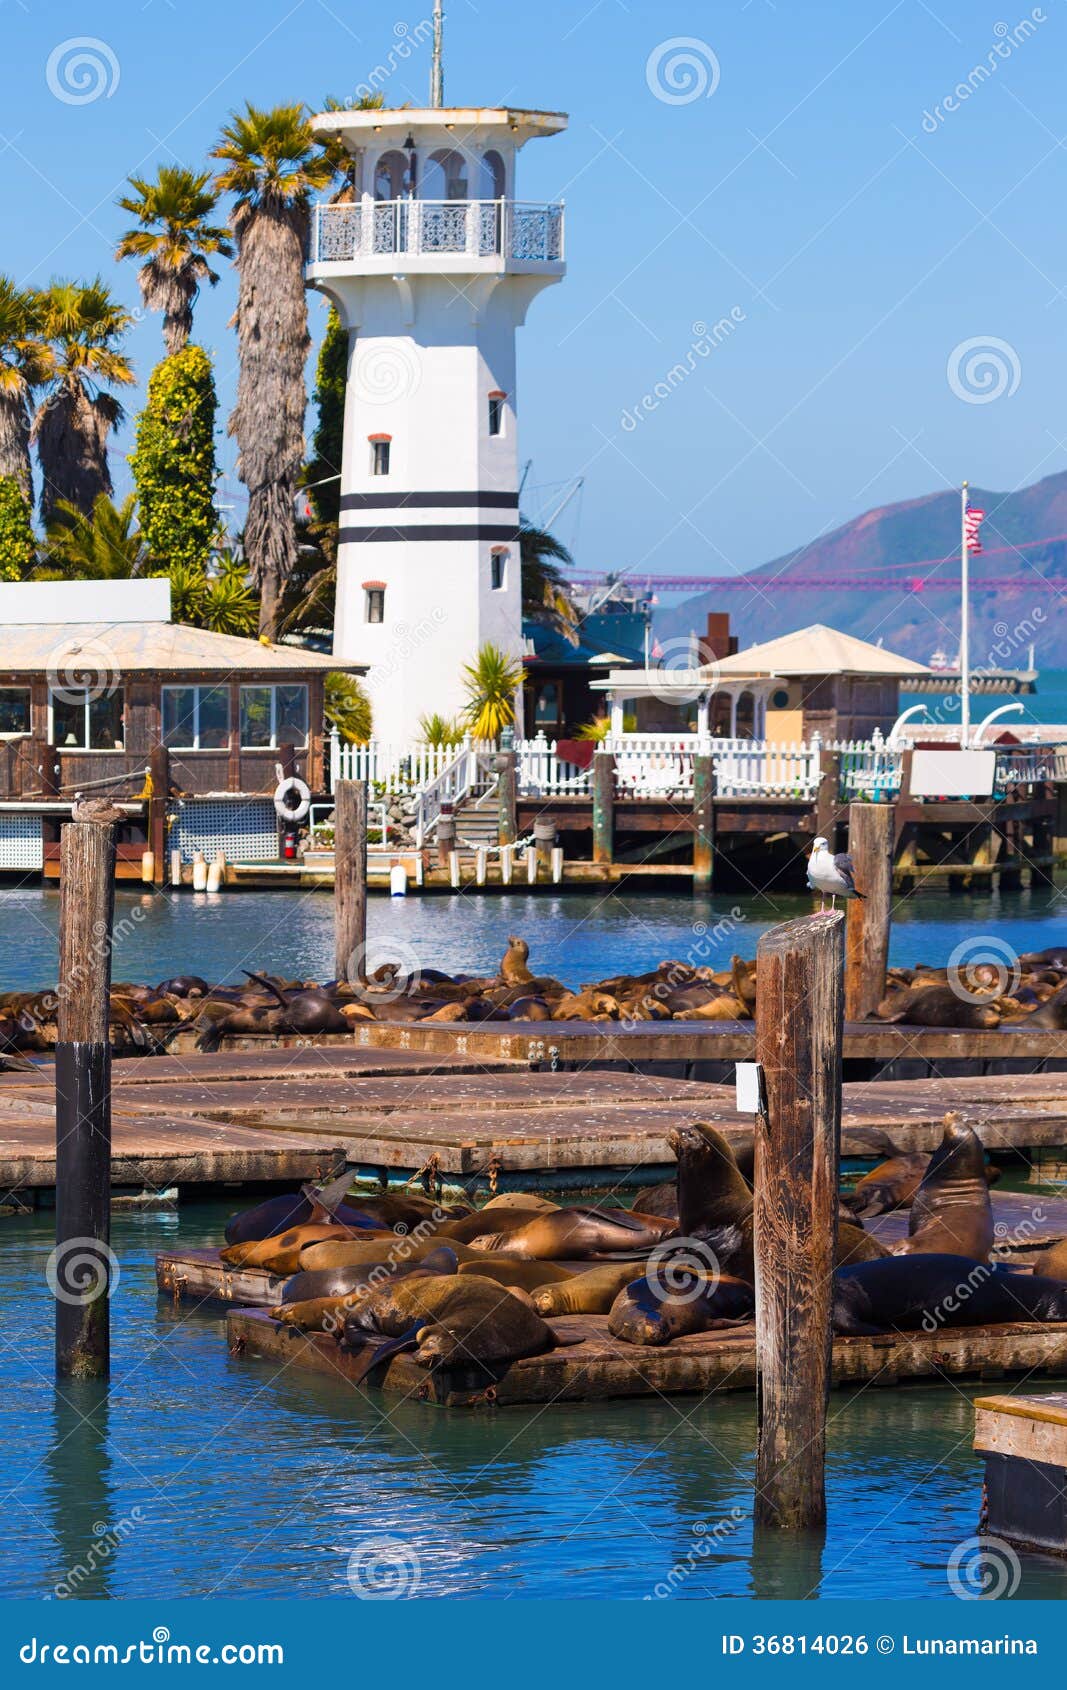 san francisco pier 39 lighthouse and seals california